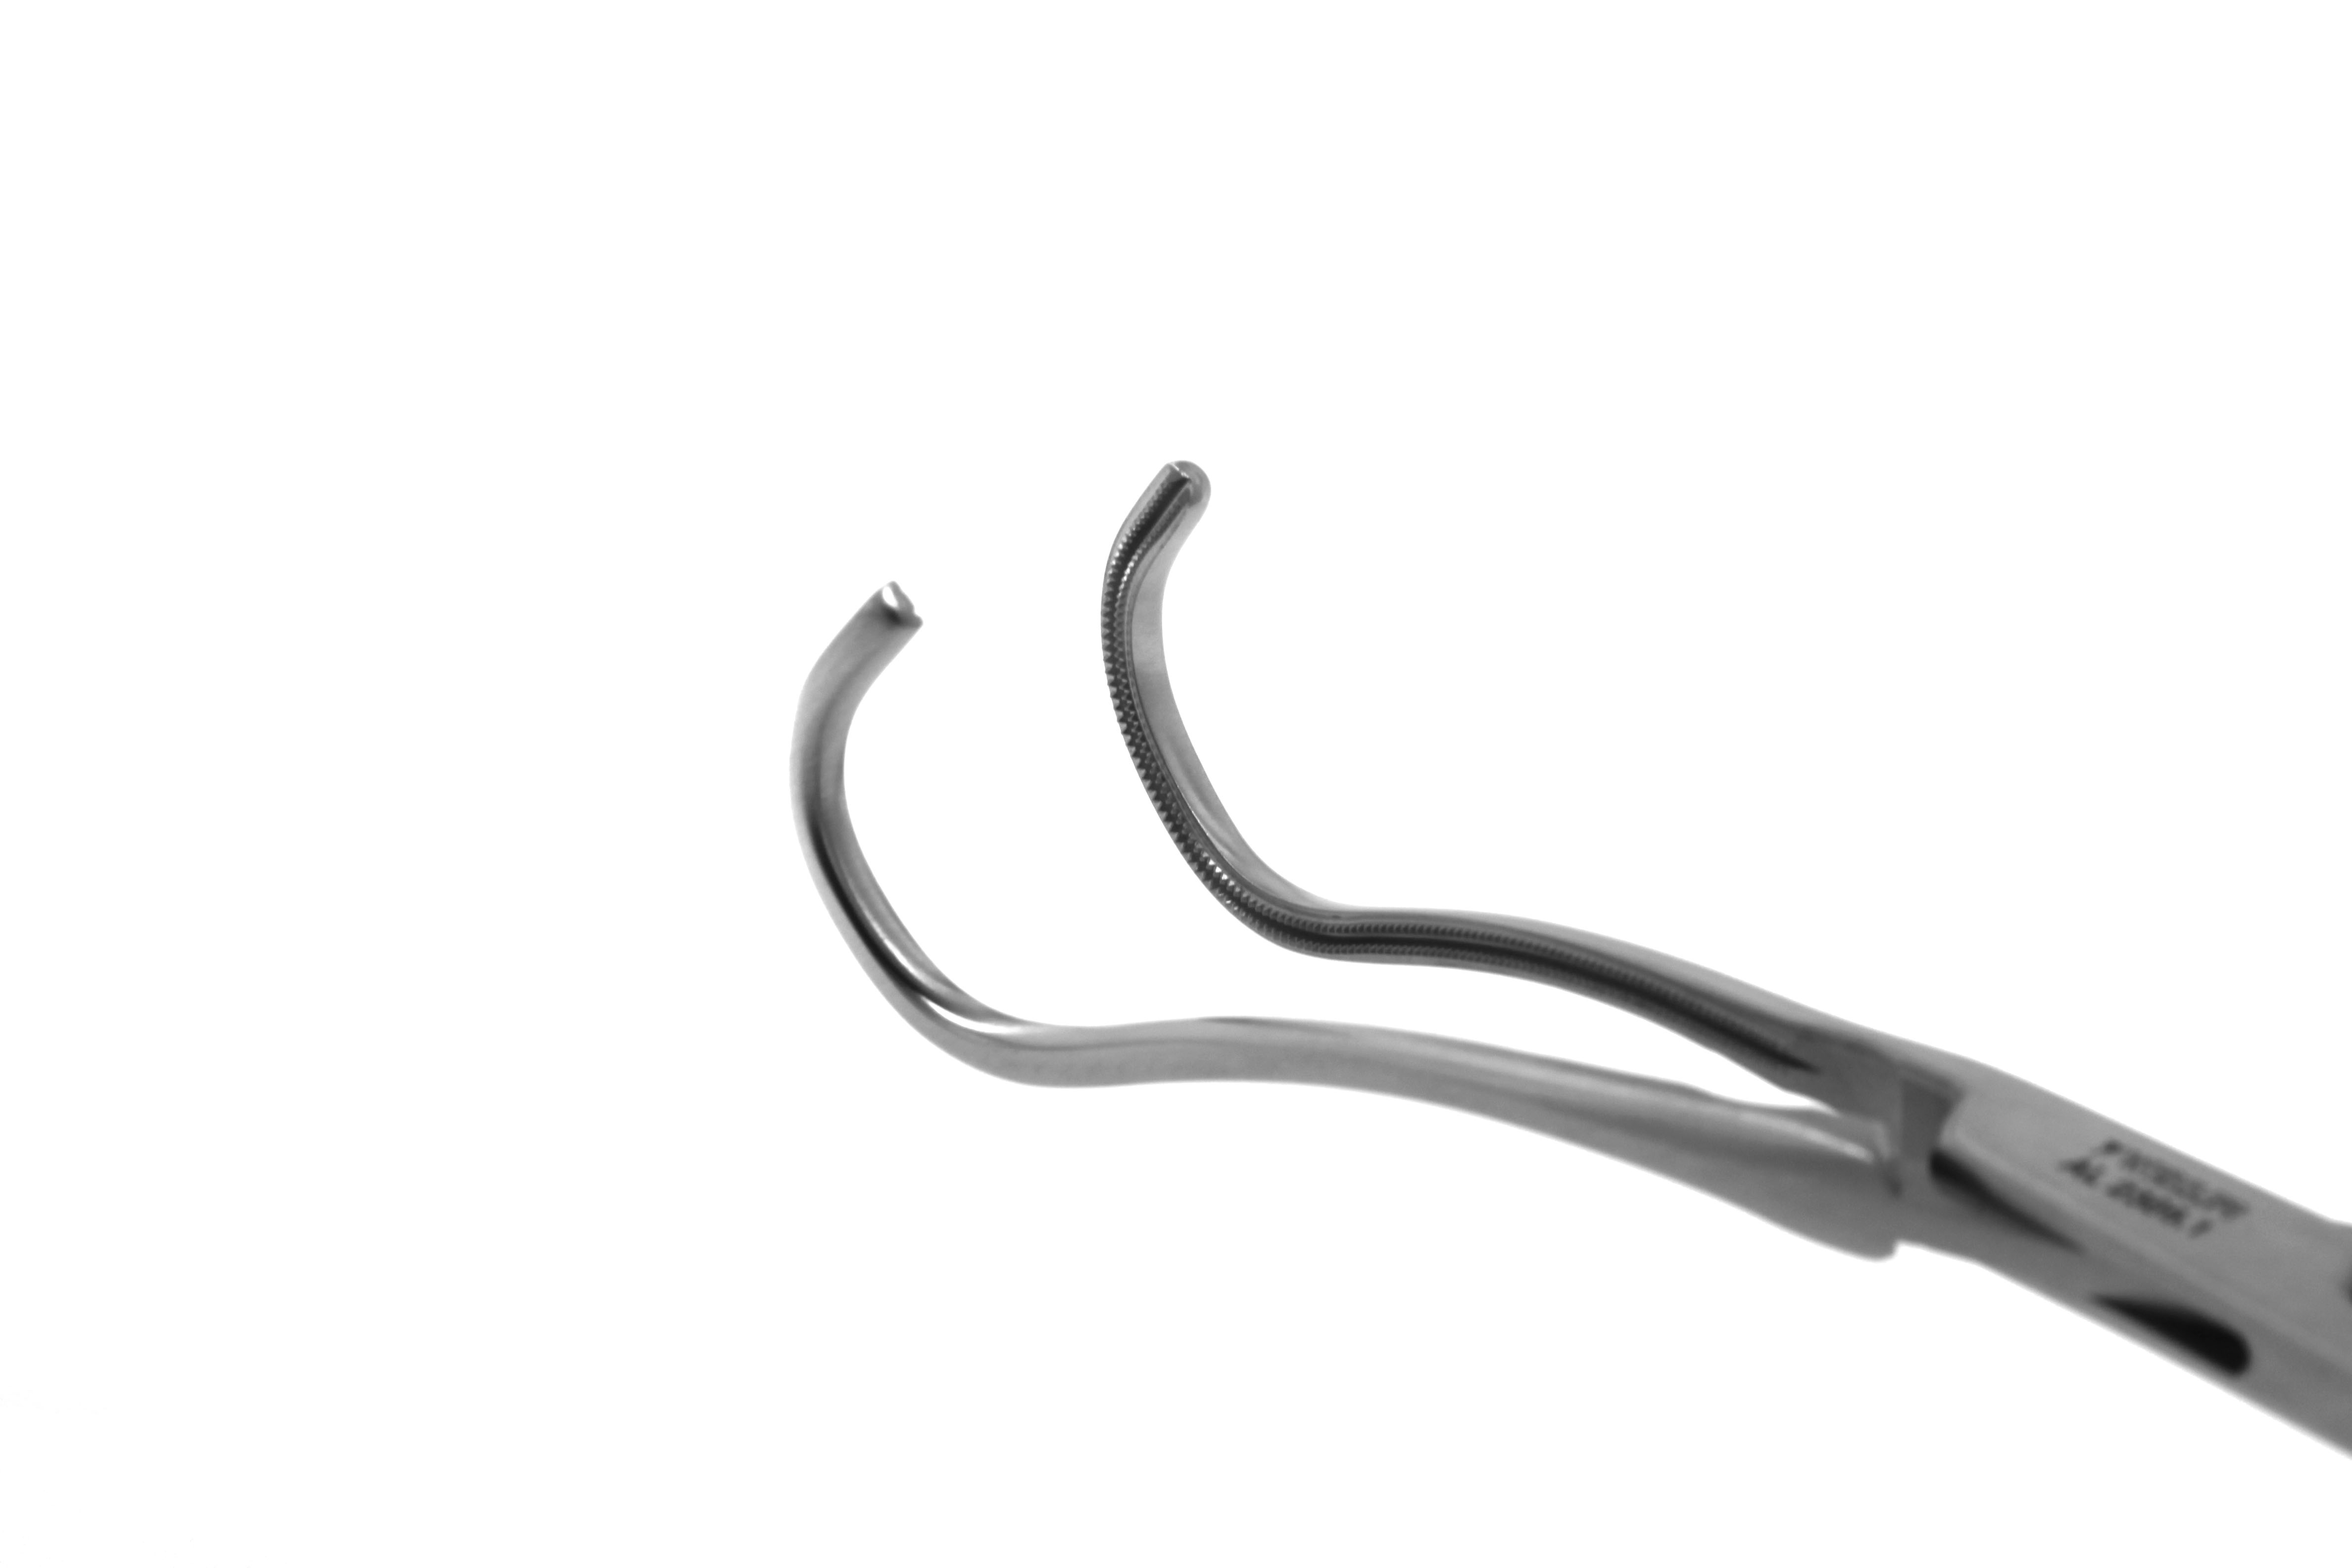 Wexler Anastomosis Clamp - Angled DeBakey Atraumatic 20mm jaws